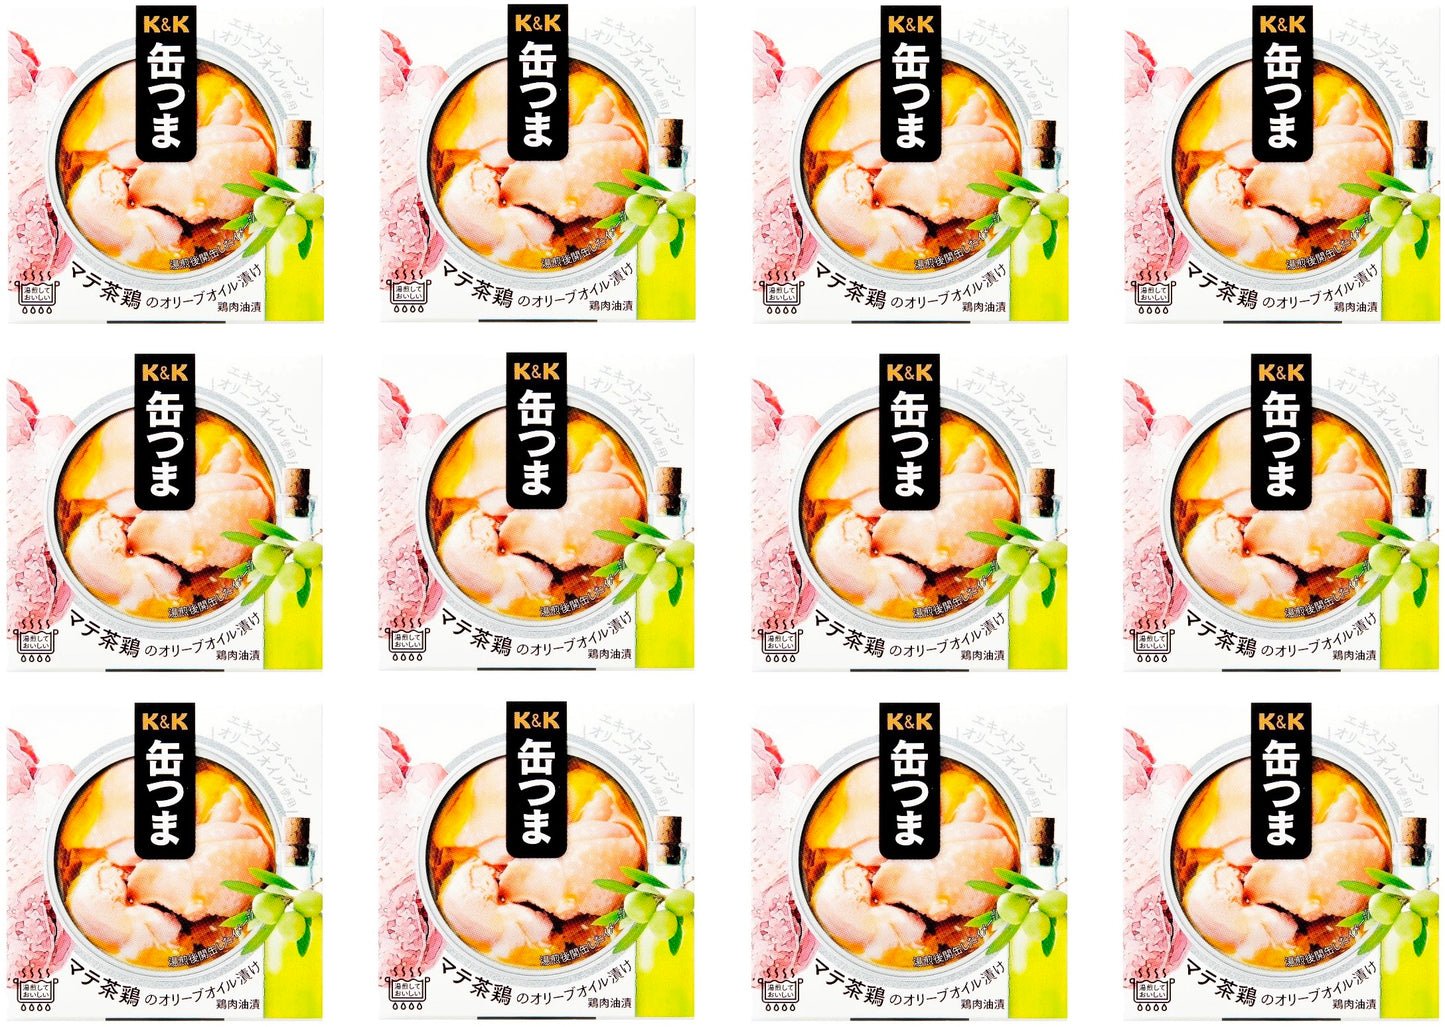 Canned Food Chicken KANTSUMA Olive Oil Garlic Preserved Snack Food Japanese 150g